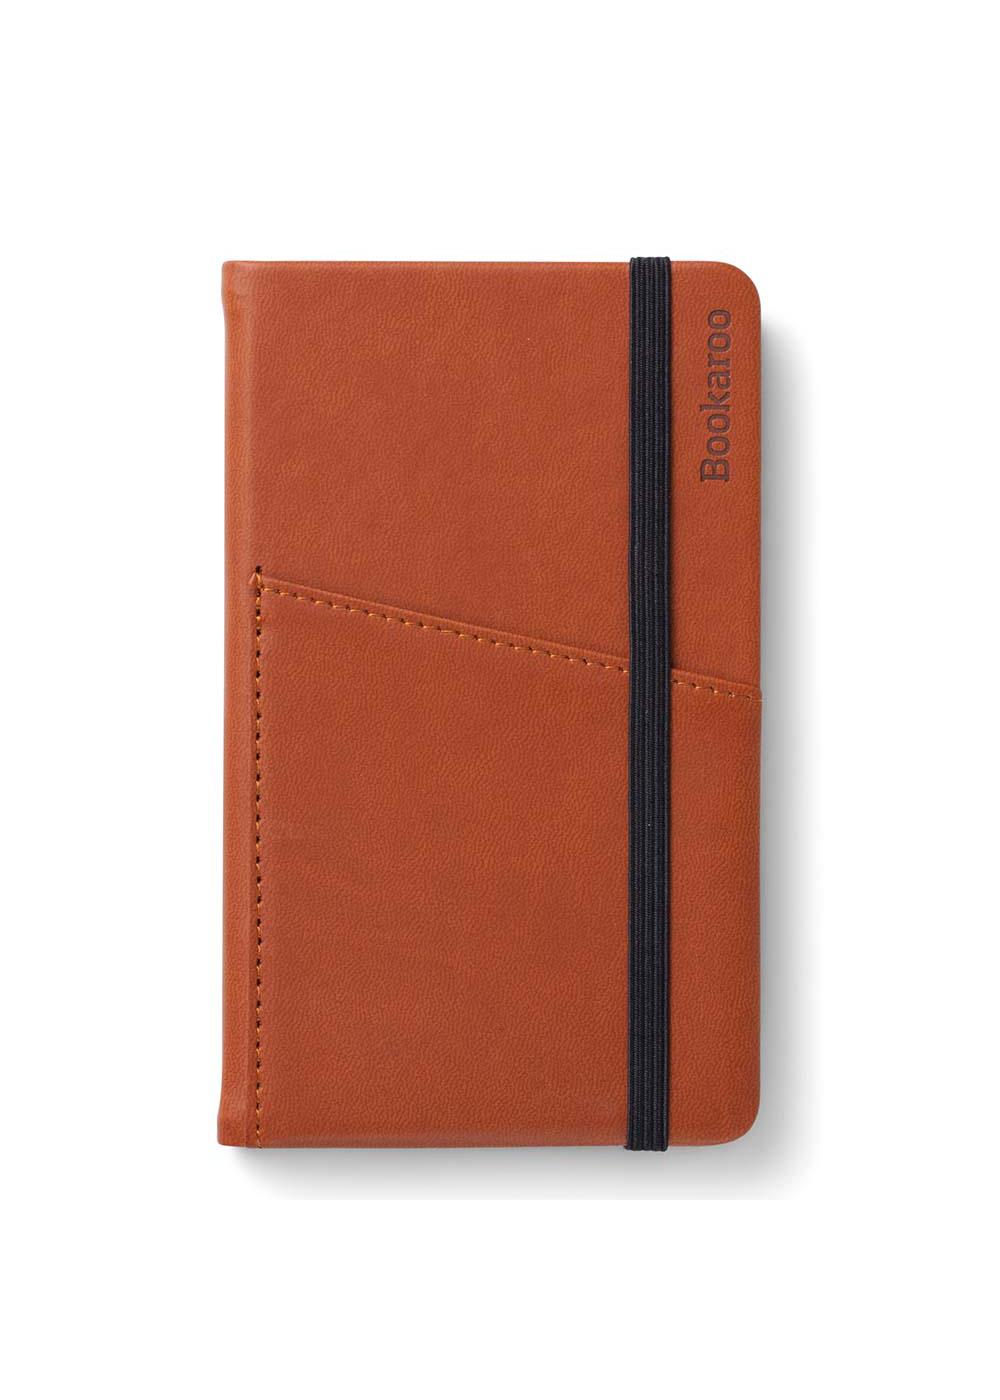 Bookaroo Small Pocket Notebook - Brown; image 2 of 2